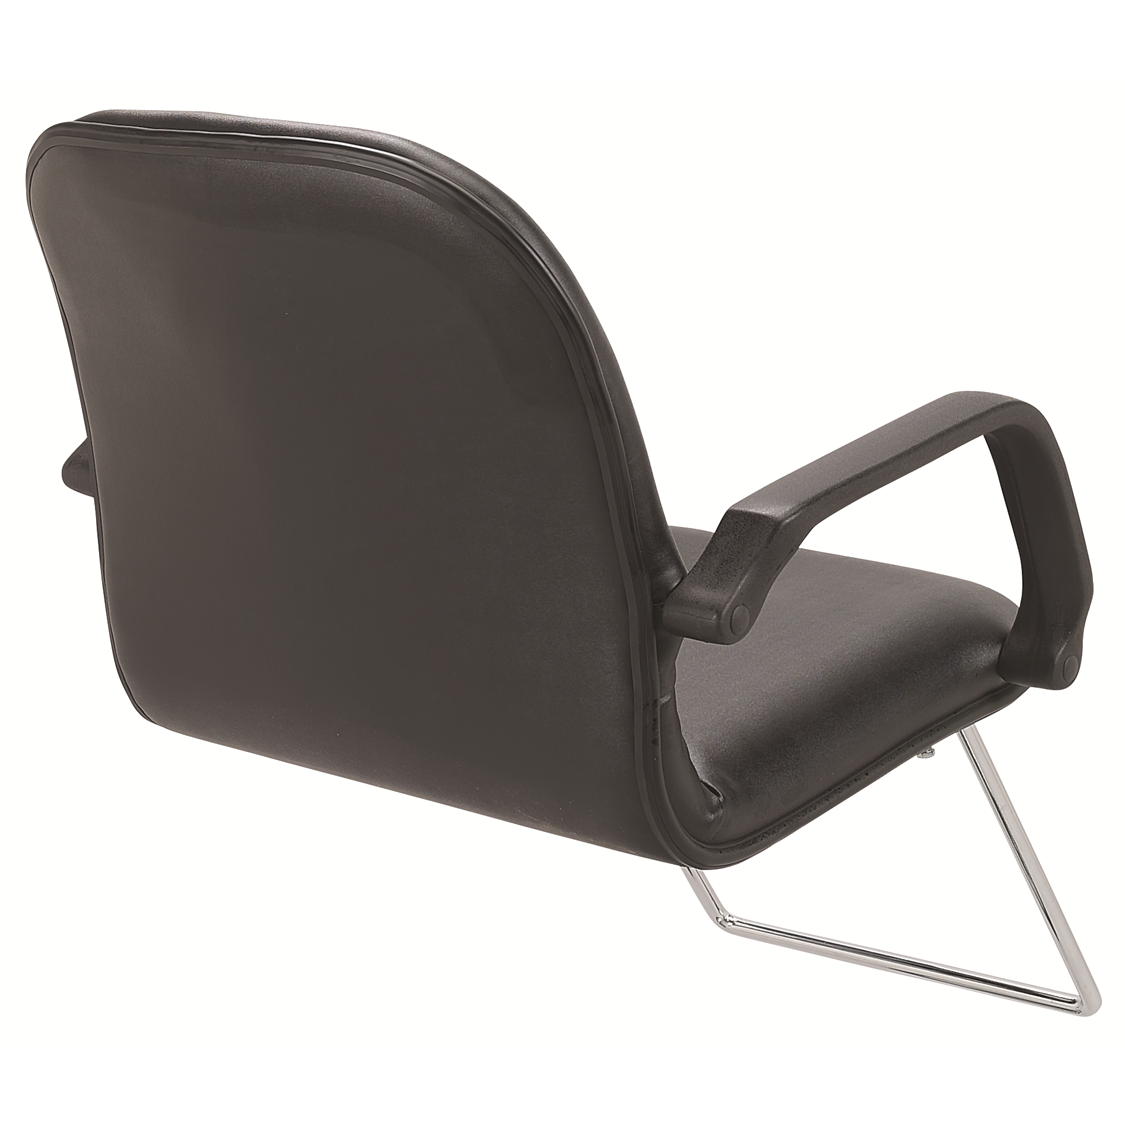 Perpetua Salon Styling Chair - Garfield Commercial Enterprises Salon Equipment Spa Furniture Barber Chair Luxury